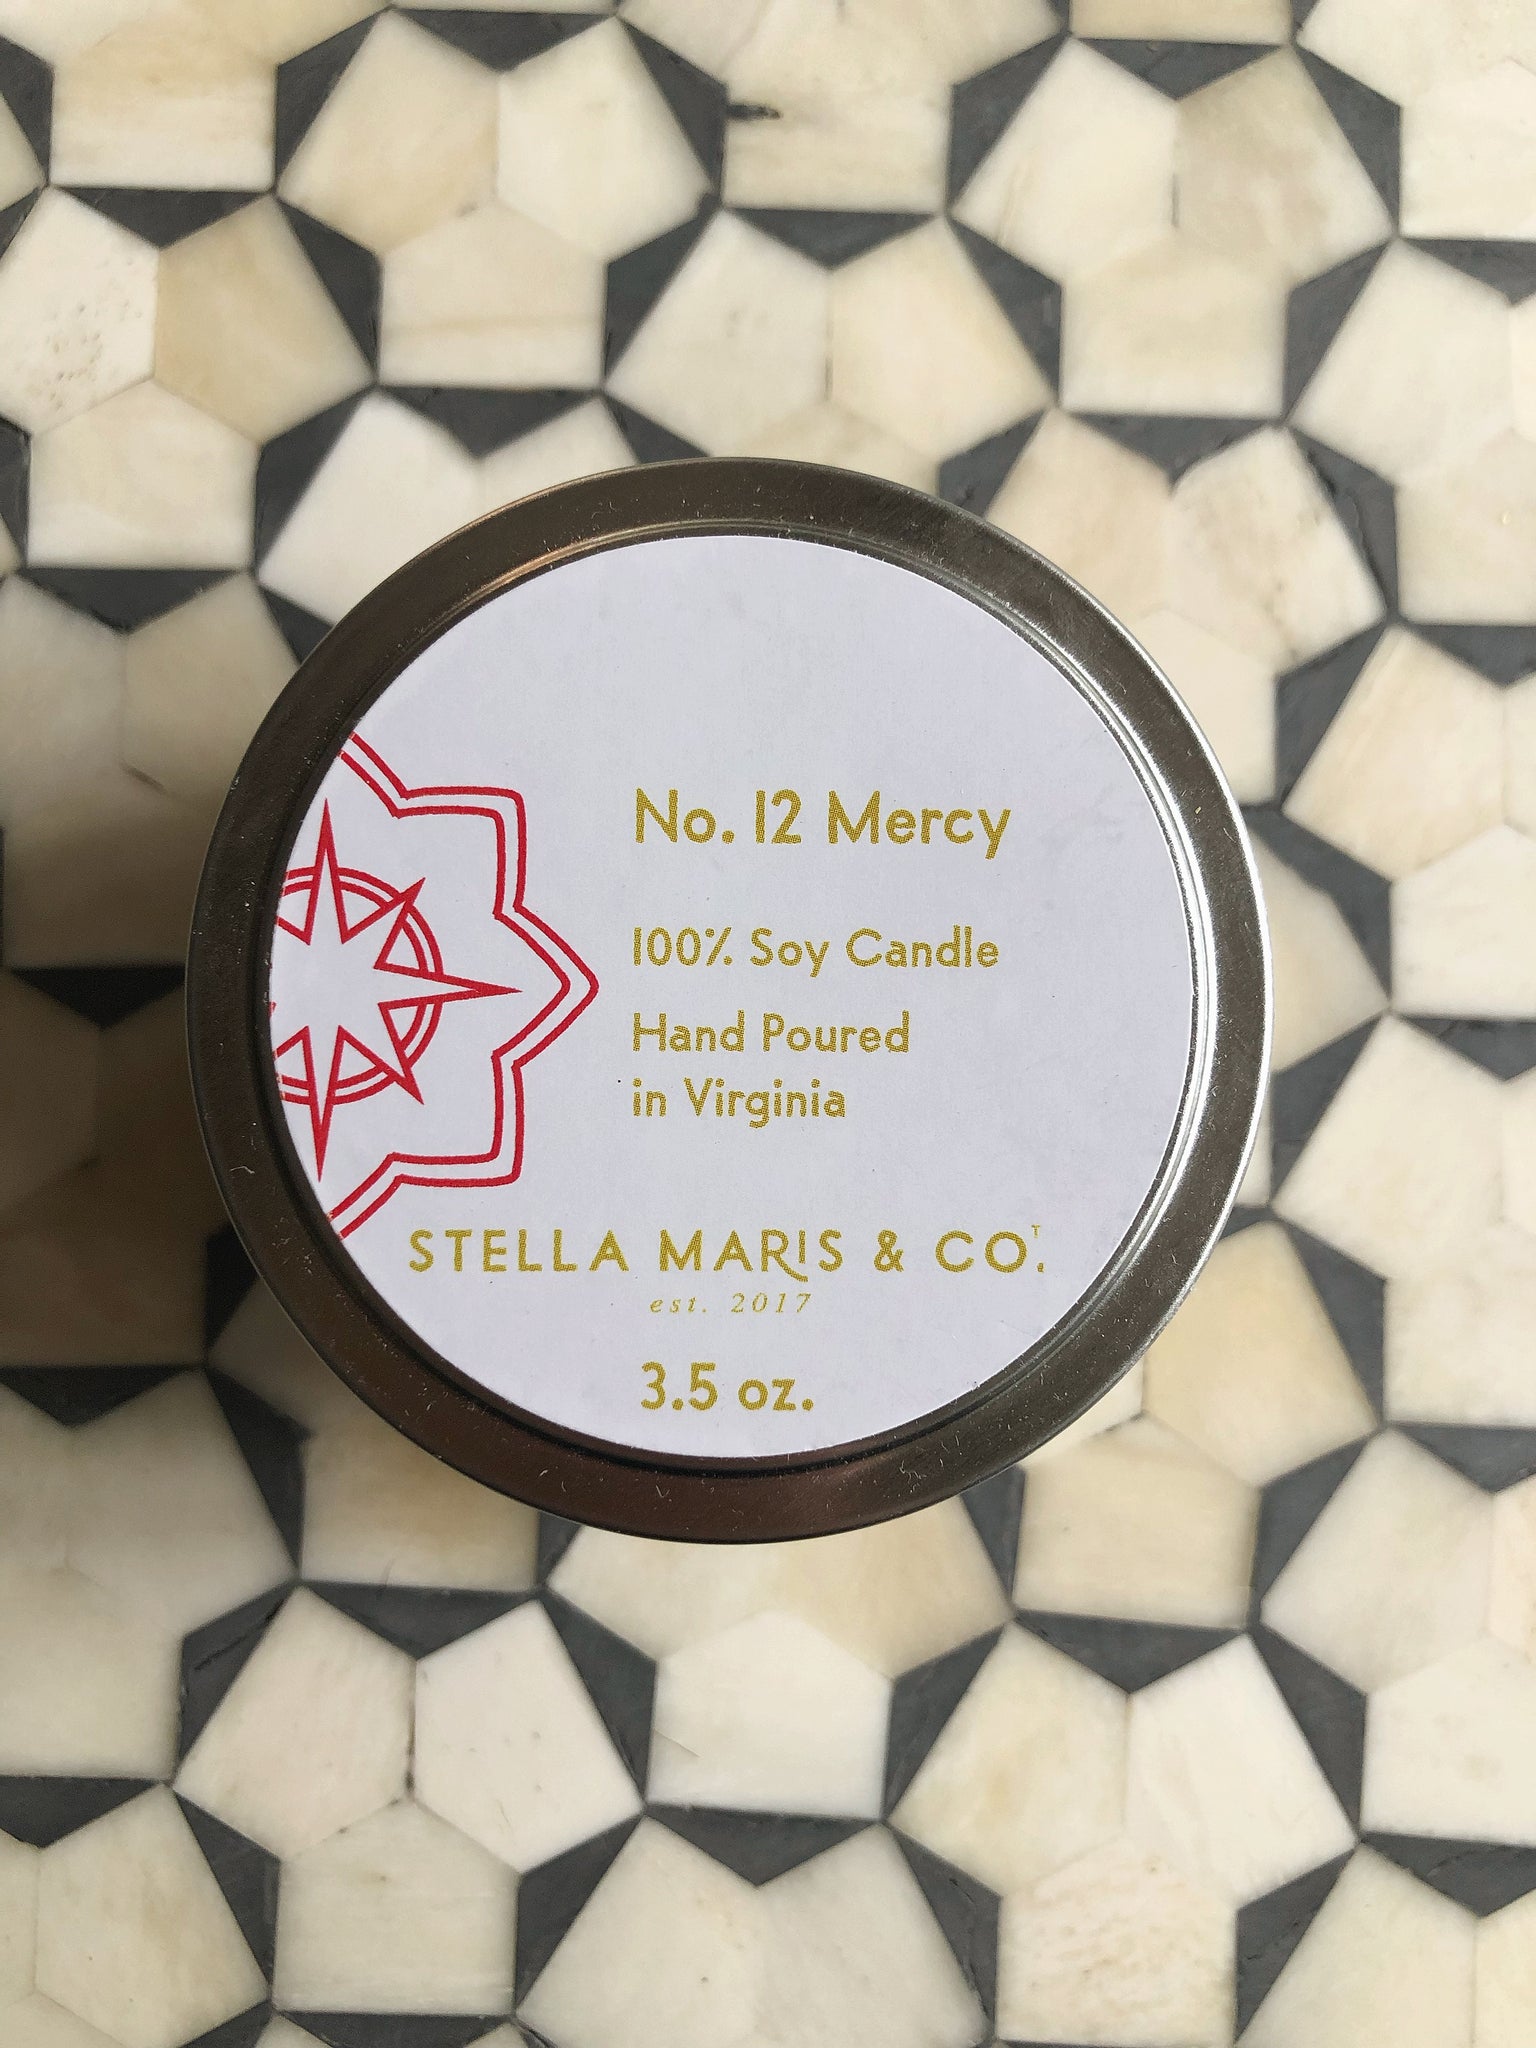 Stella Maris & Co. Travel Candles